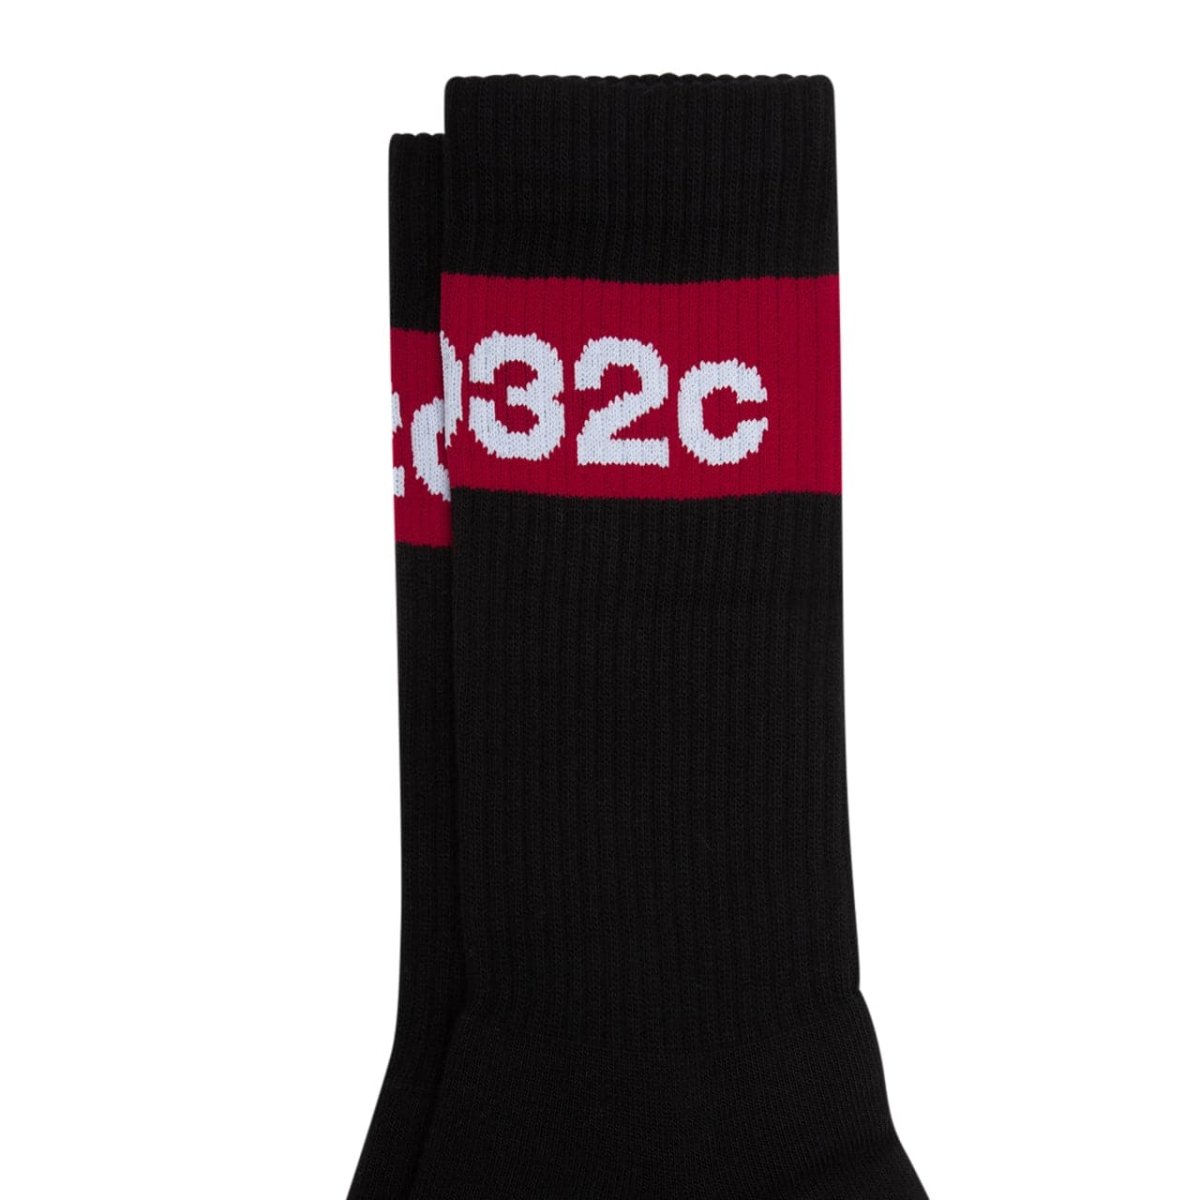 032c Tape Socks (Schwarz)  - Allike Store